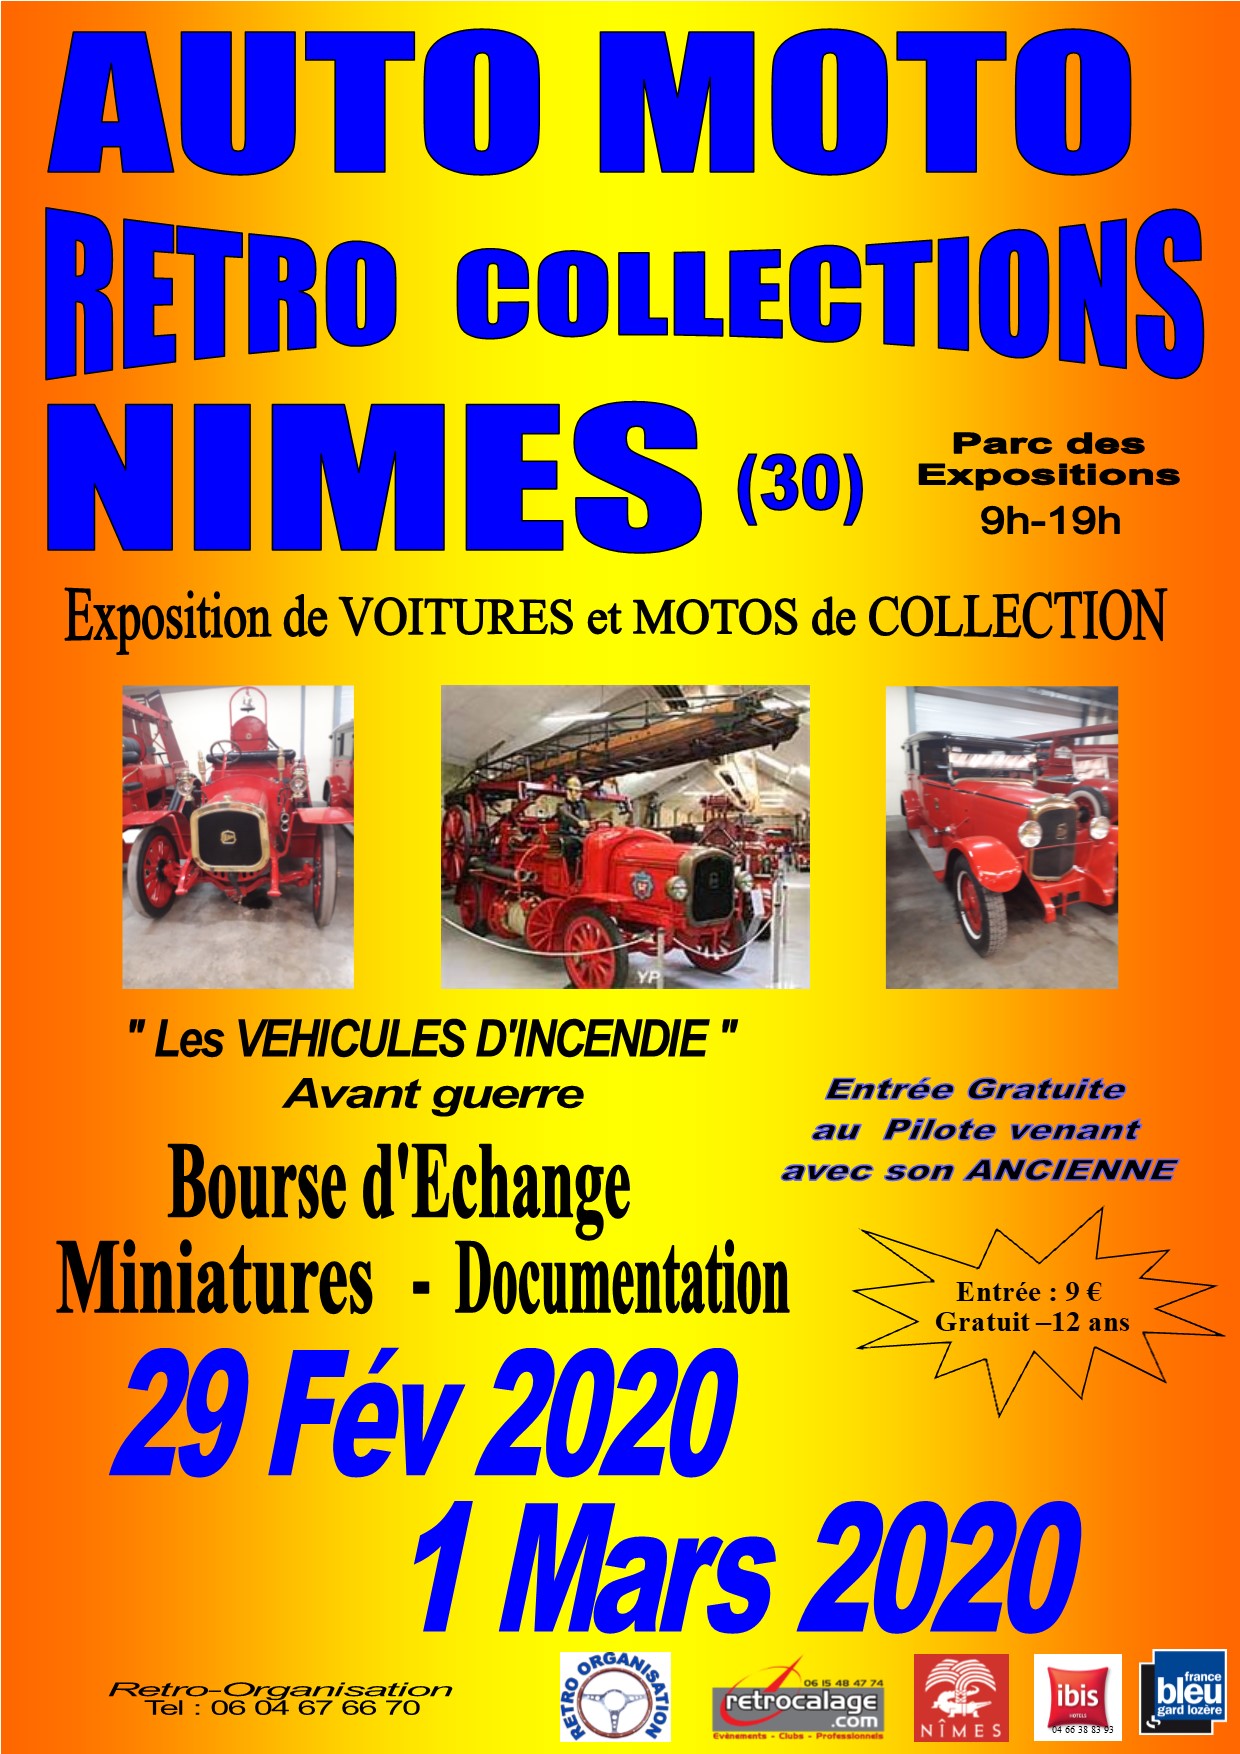 Auto Moto Retro Collections Nimes 2020